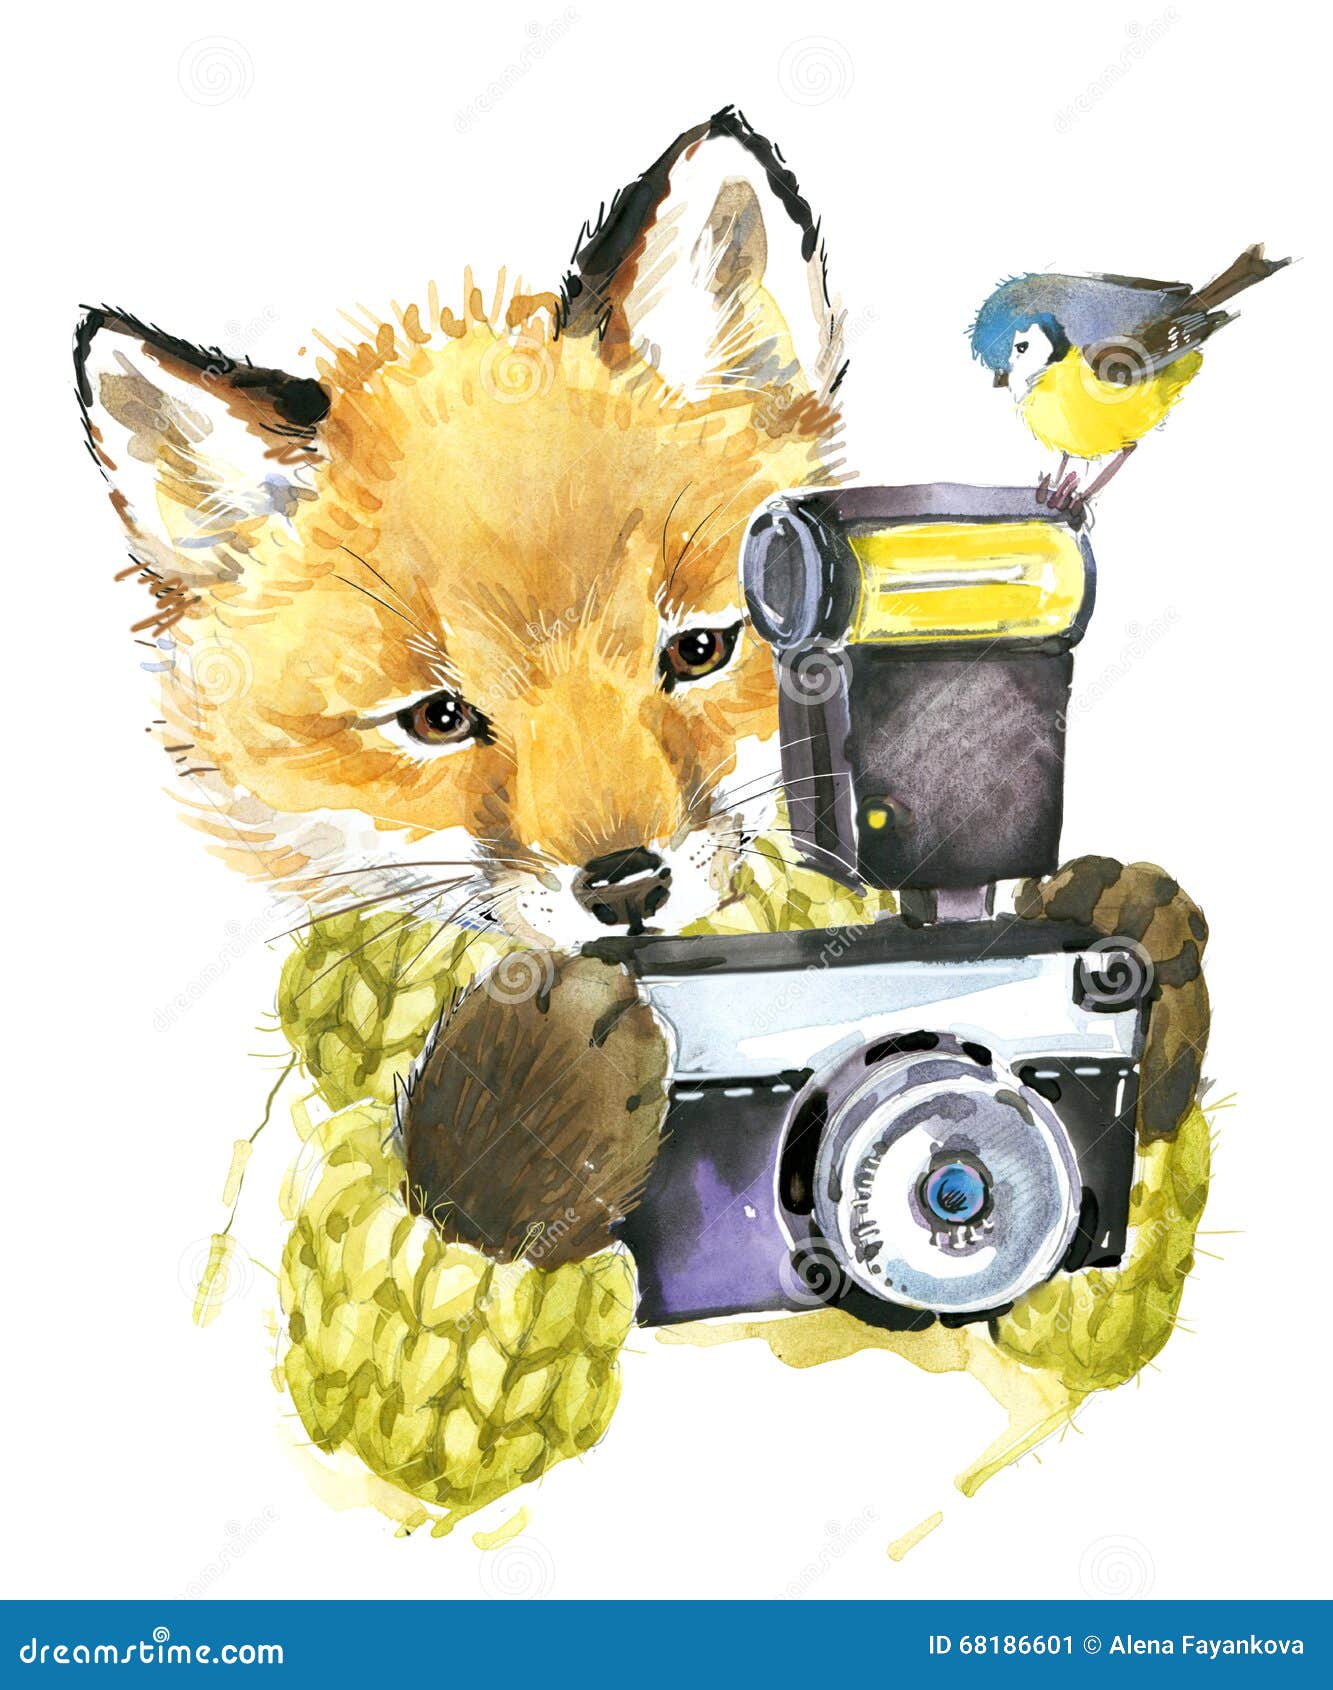 Take fox. Лиса с фотоаппаратом. Лисенок с фотоаппаратом. Фотоаппарат со зверюшками. Лисичка с фотоаппаратом.